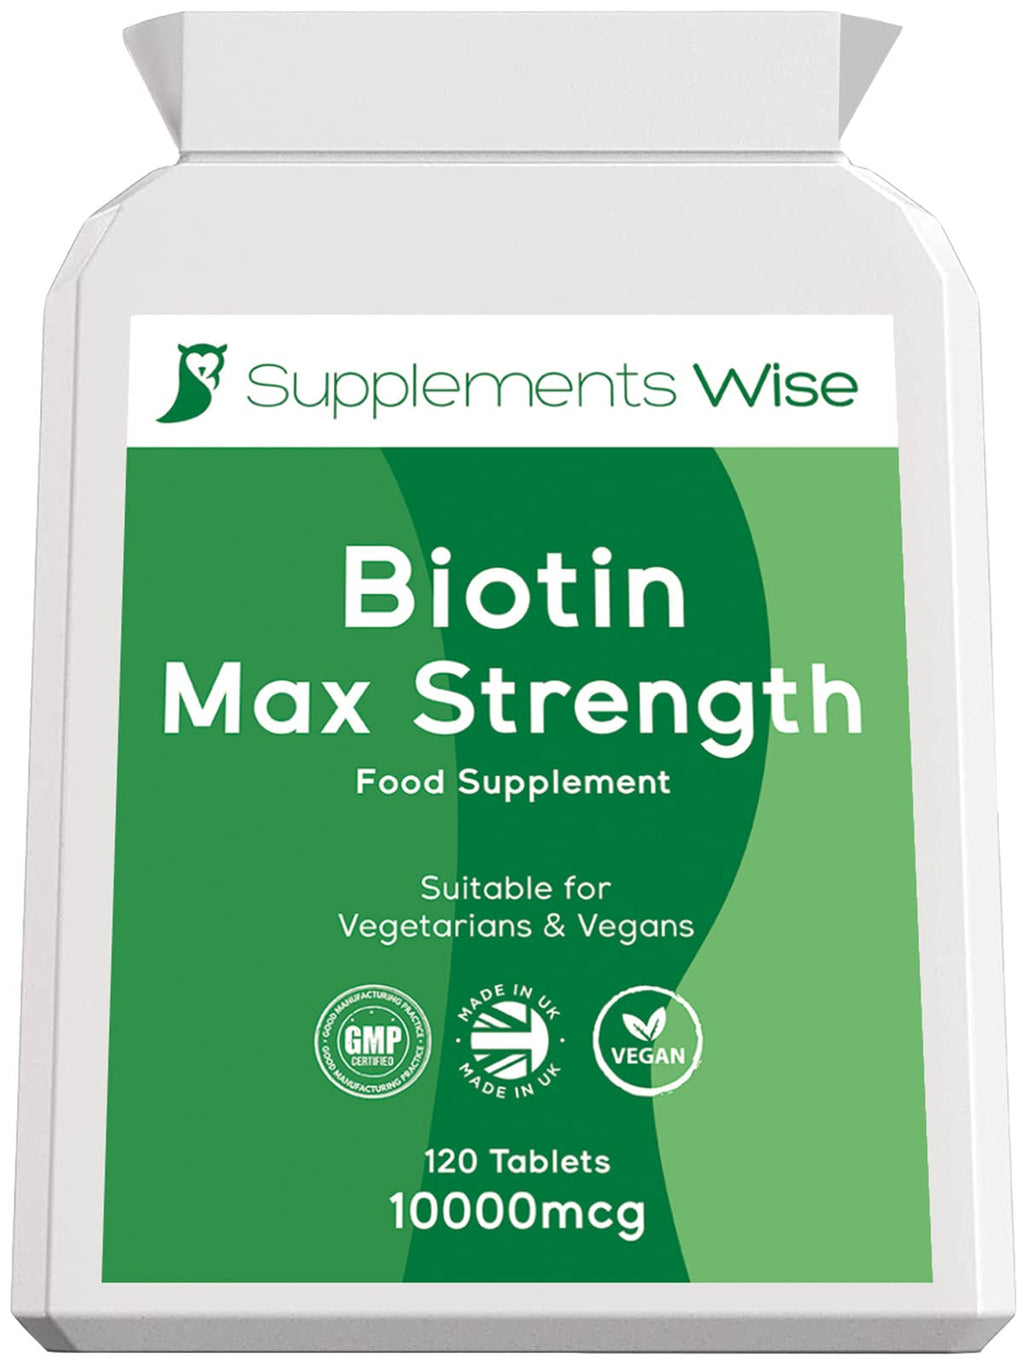 Biotin Hair Growth Supplement- 120 X 10000mcg Biotin Tablets - Thicker Hair and Fuller Beard - Faster Nail Growth - Healthy Skin - For Men or Women - Max Strength Hair Vitamins - Vitamin B7 Supplement - BeesActive Australia